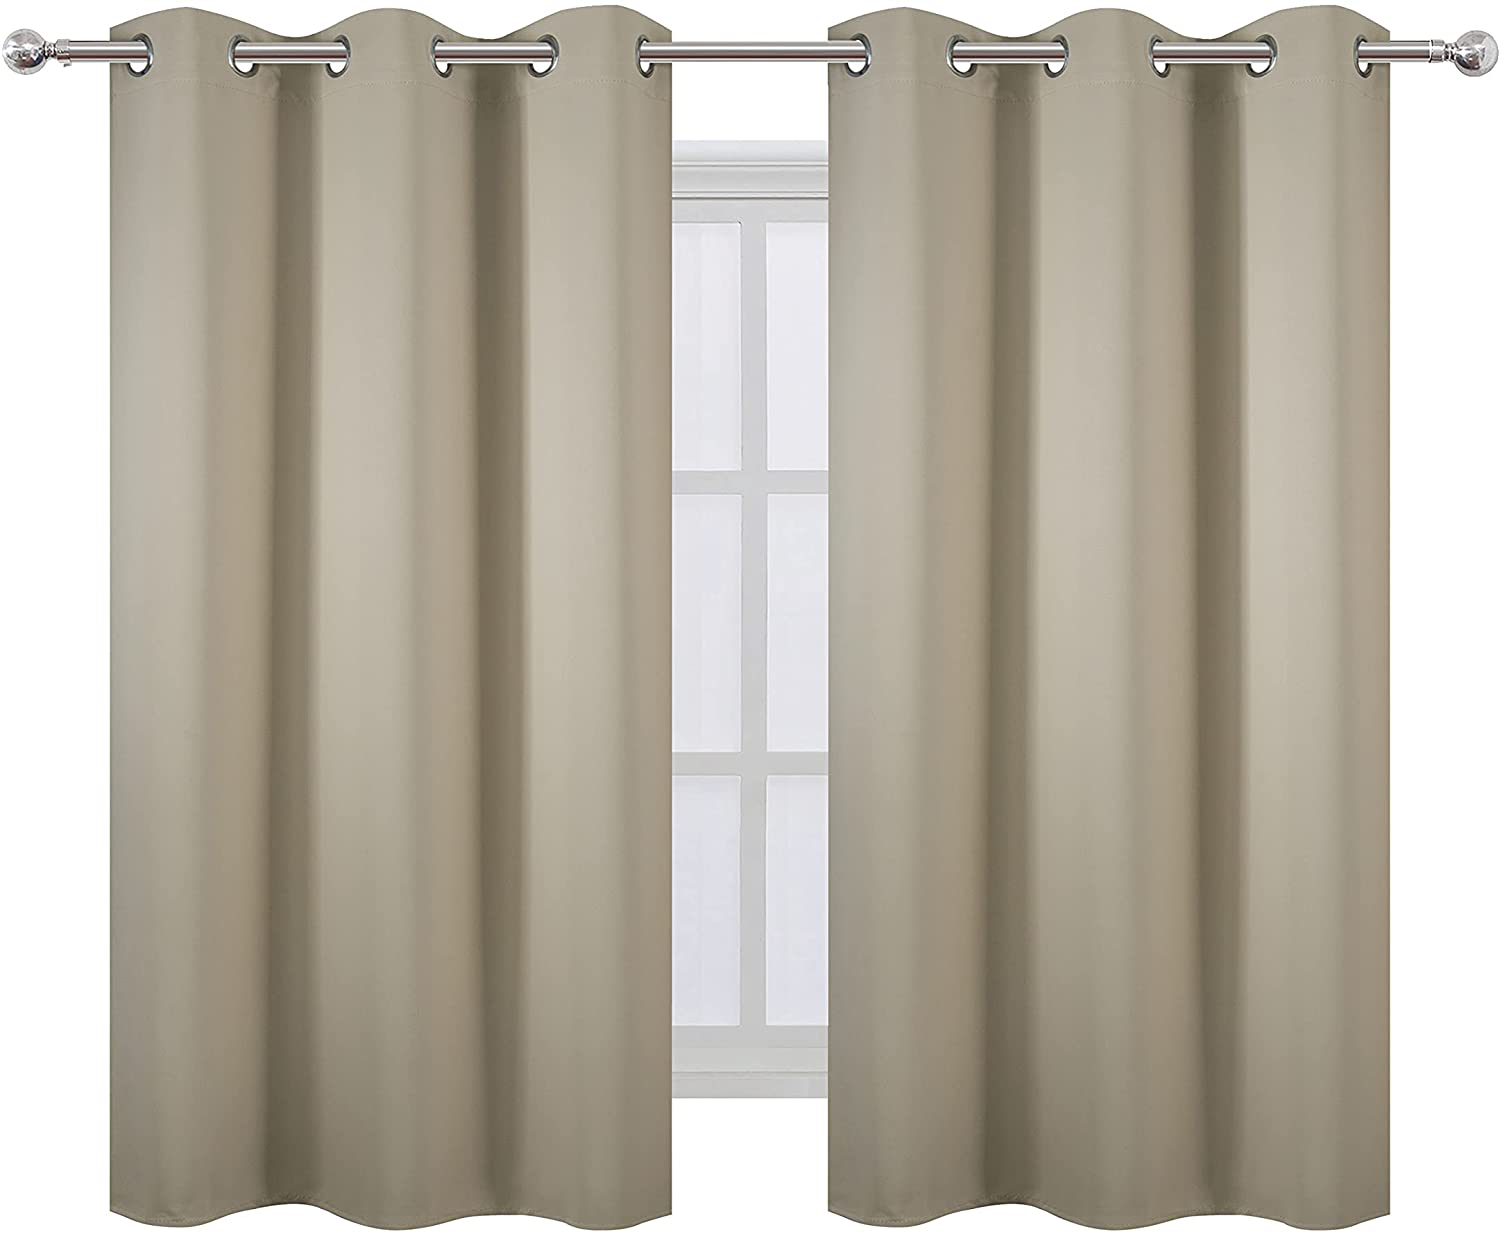 LEMOMO Black Thermal Blackout Curtains/52 x 54 Inch/Set of 2 Panels Room Darkening Curtains for Bedroom